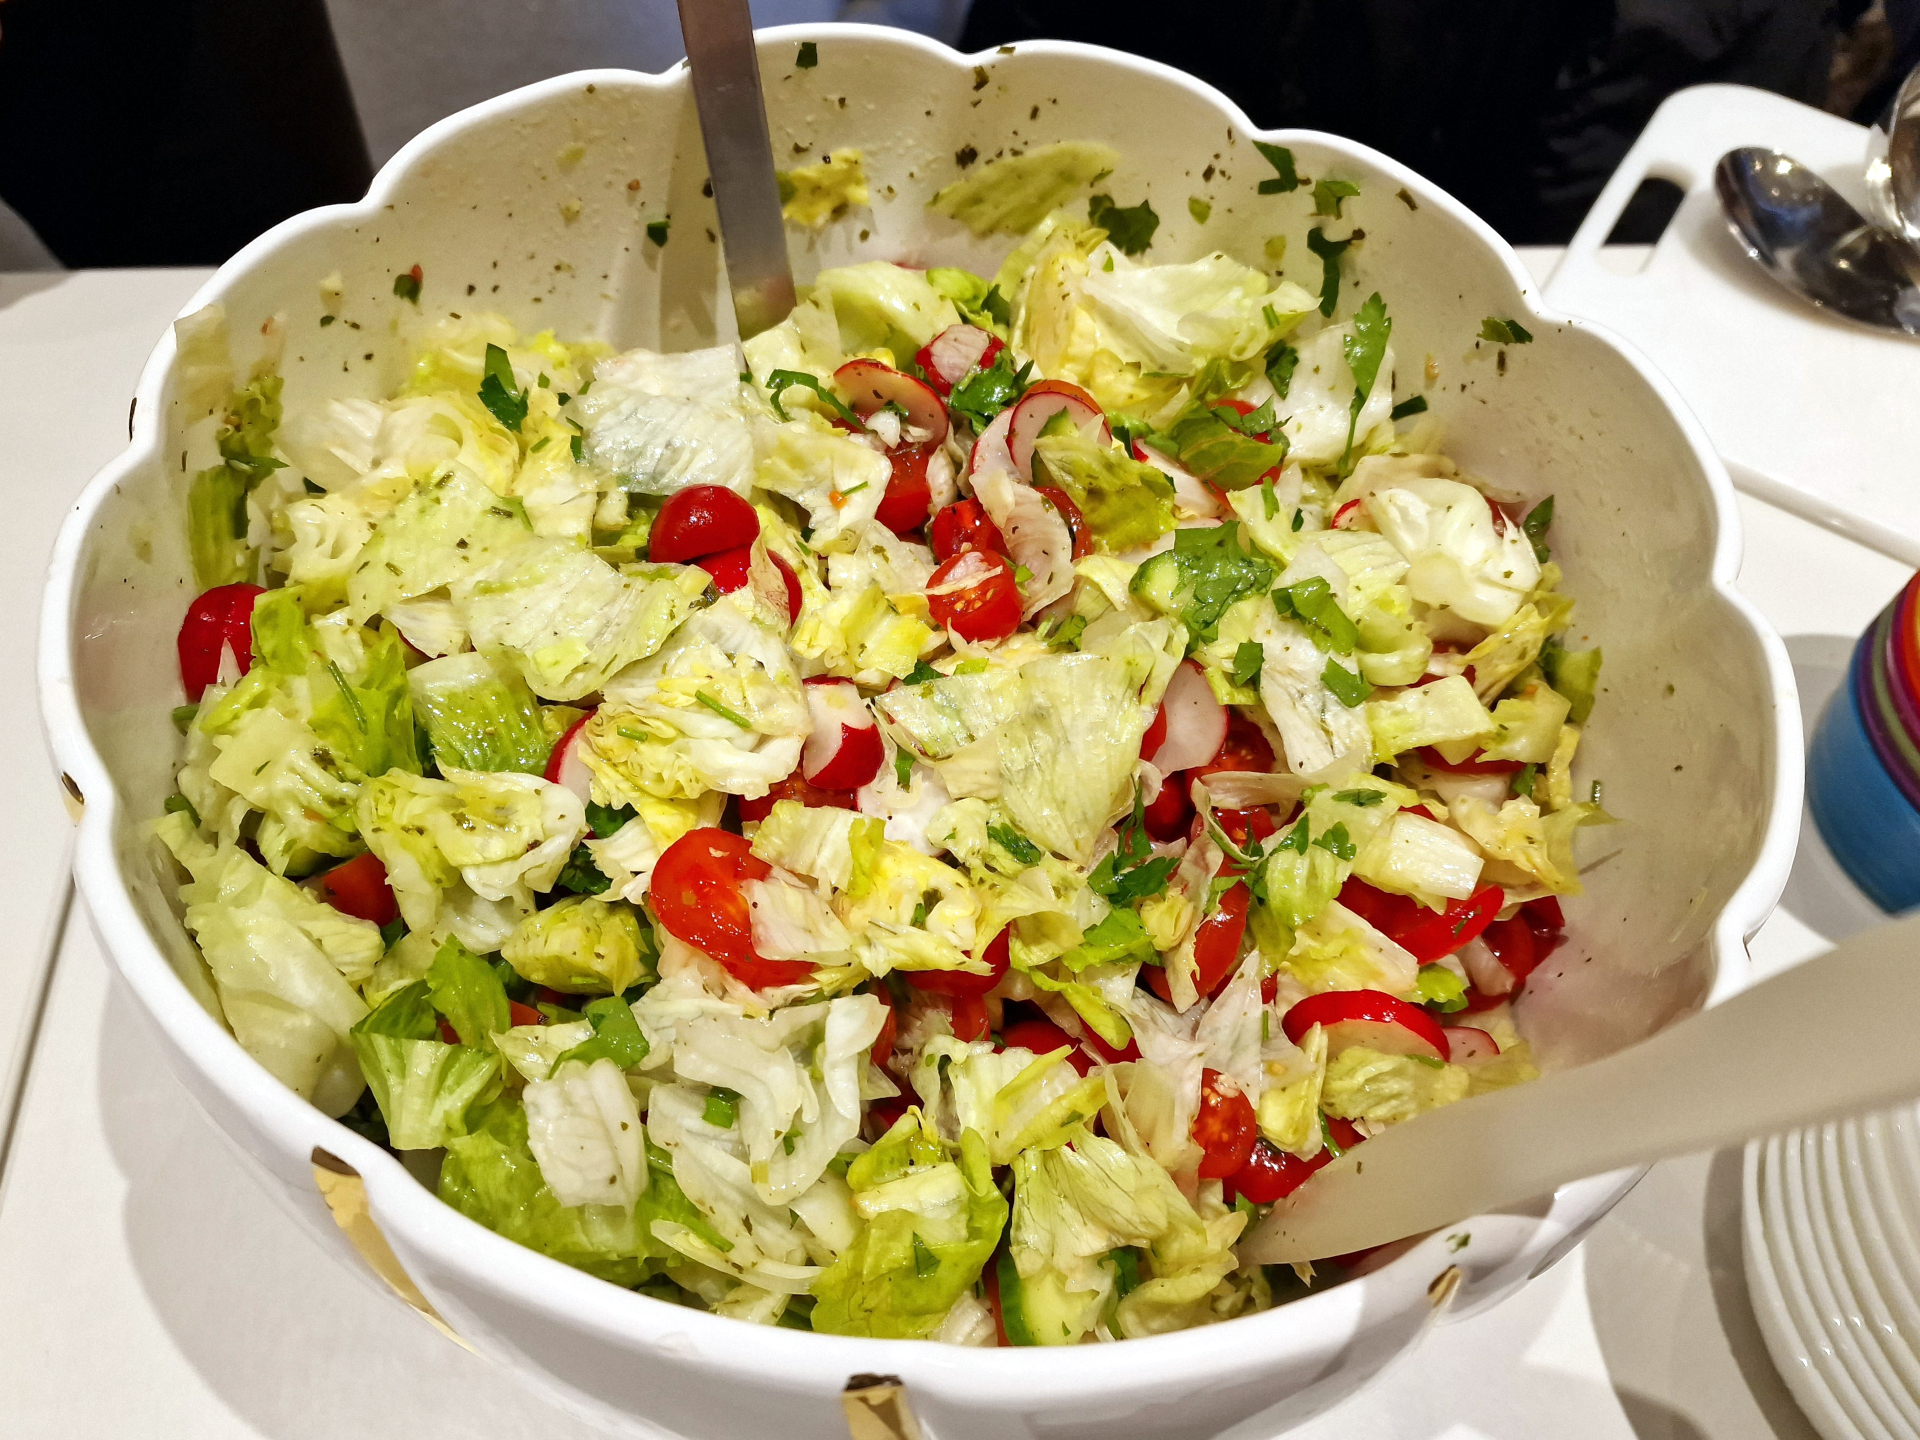 gemischter Salat bei „Dreierlei“, dem lebendigen Mittagstisch im Weidenborn